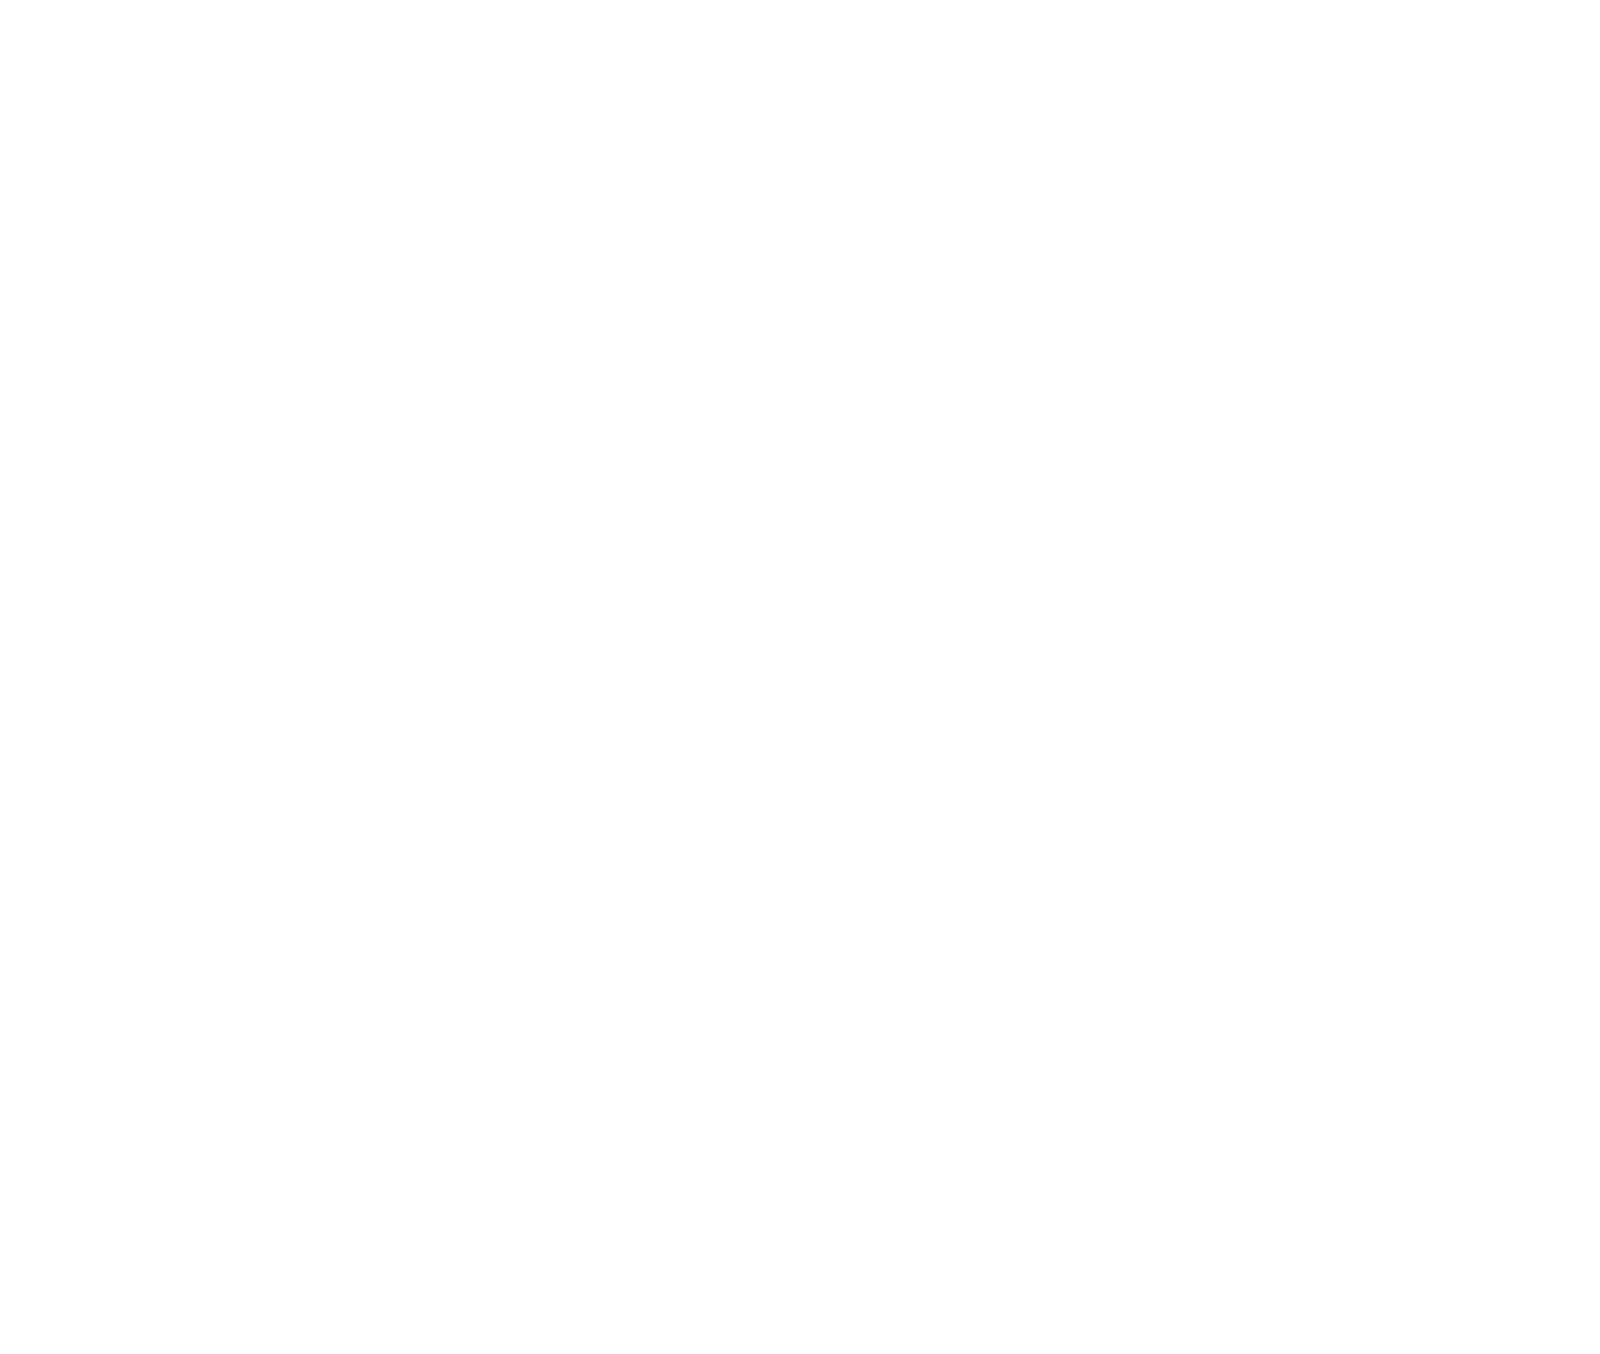 Studio Medico Legale Barulli